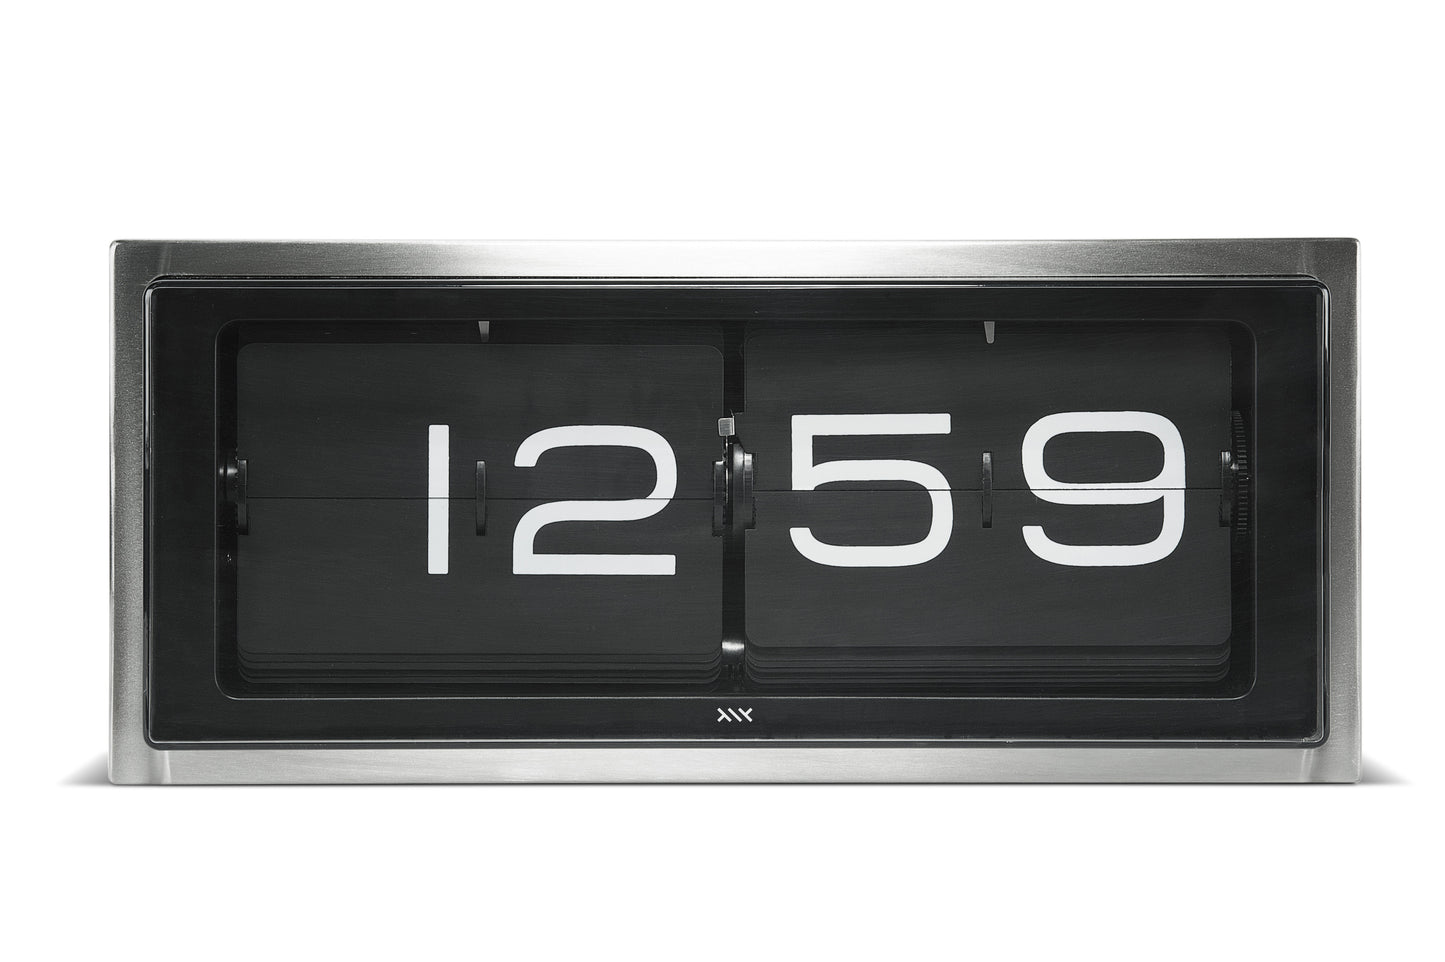 LEFF Amsterdam Retro Flip Display Brick Clock Stainless Steel Black Display with White Numbers